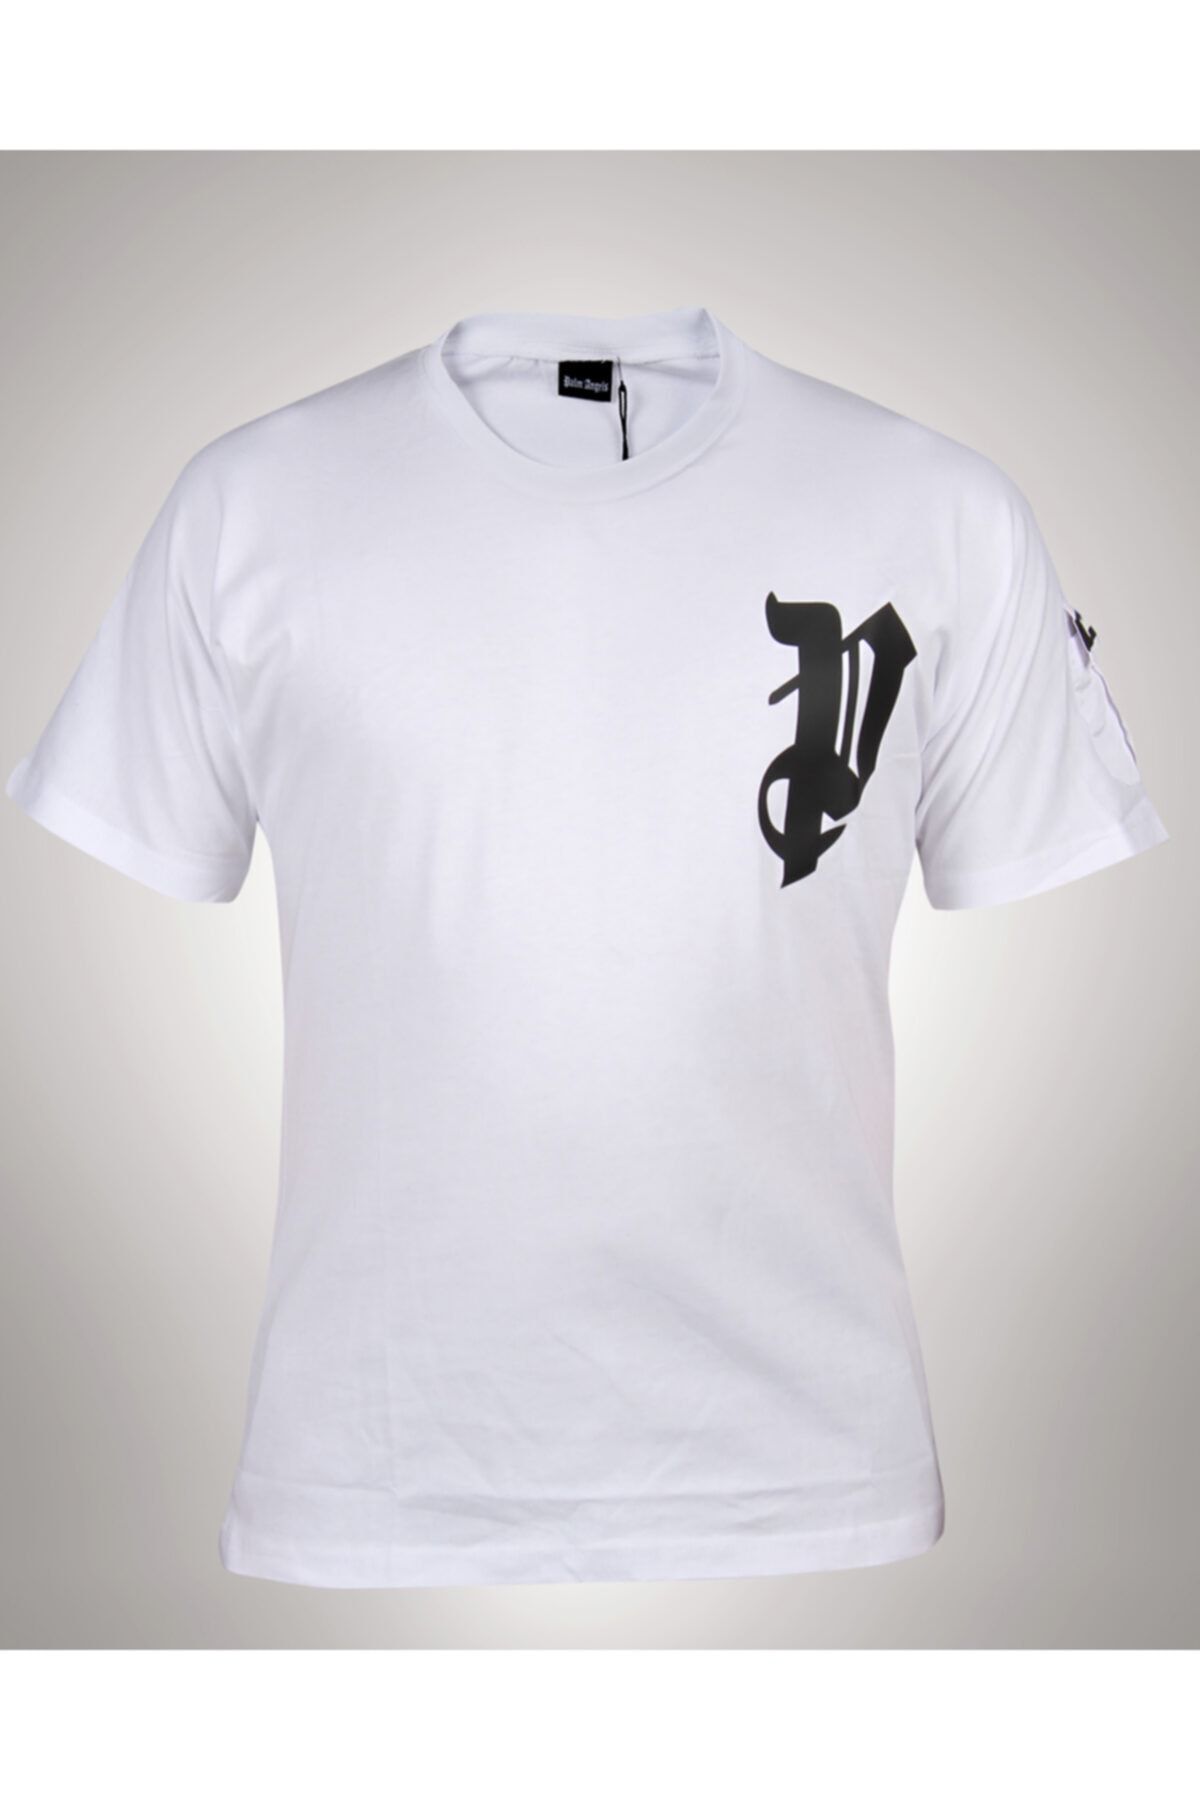 Palm Angels Unisex Beyaz T-shirt